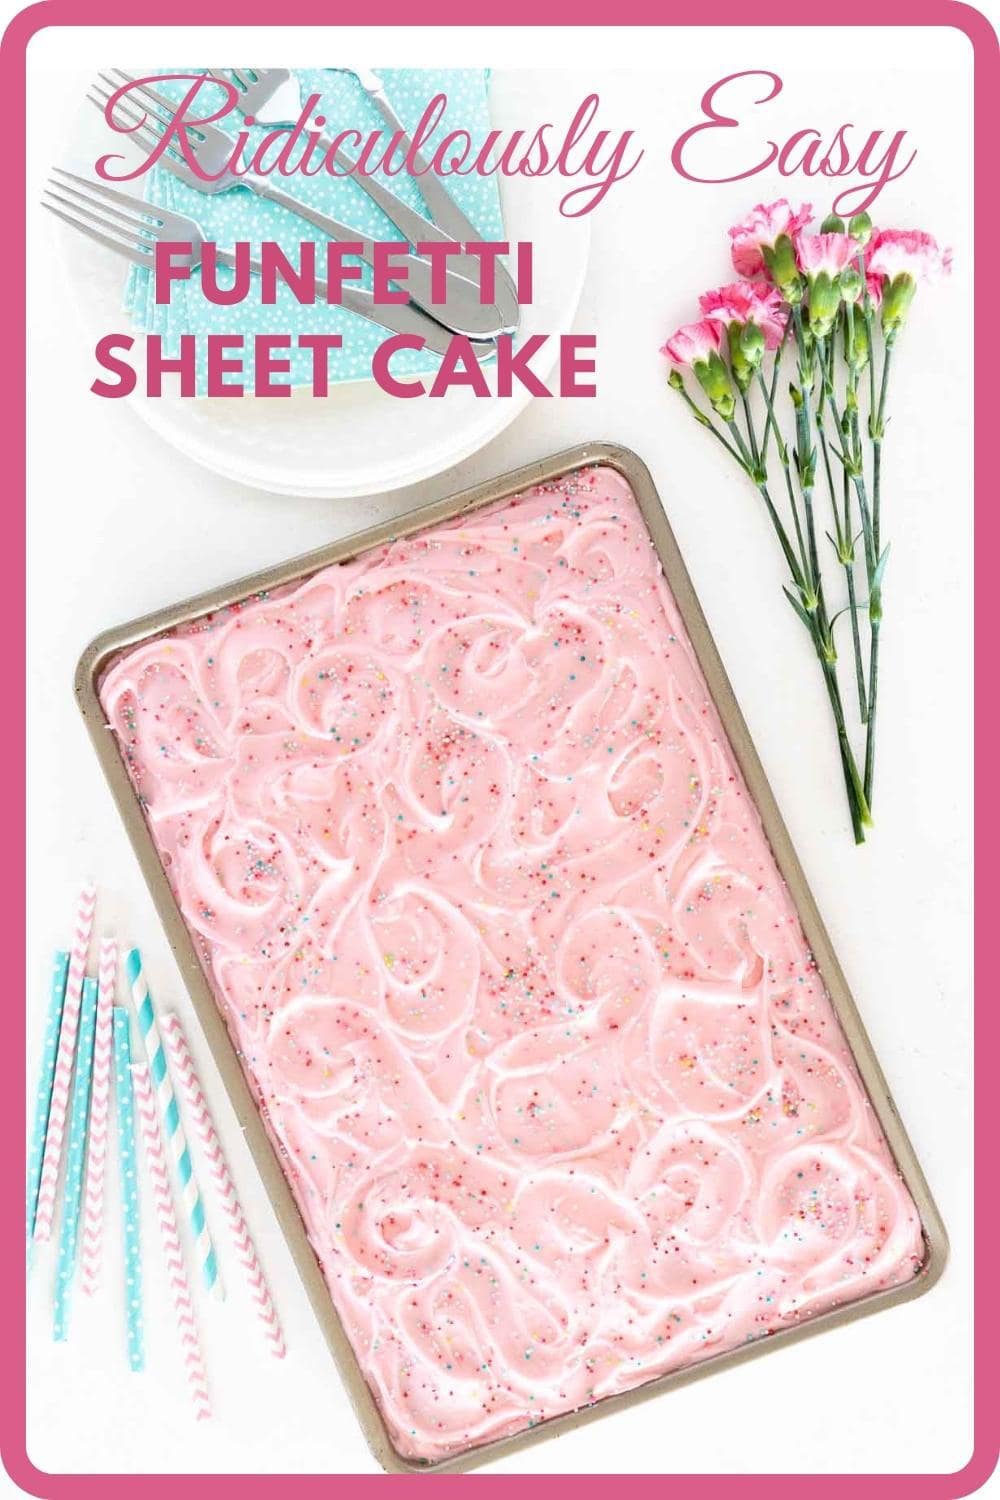 Ridiculously Easy Funfetti Sheet Cake